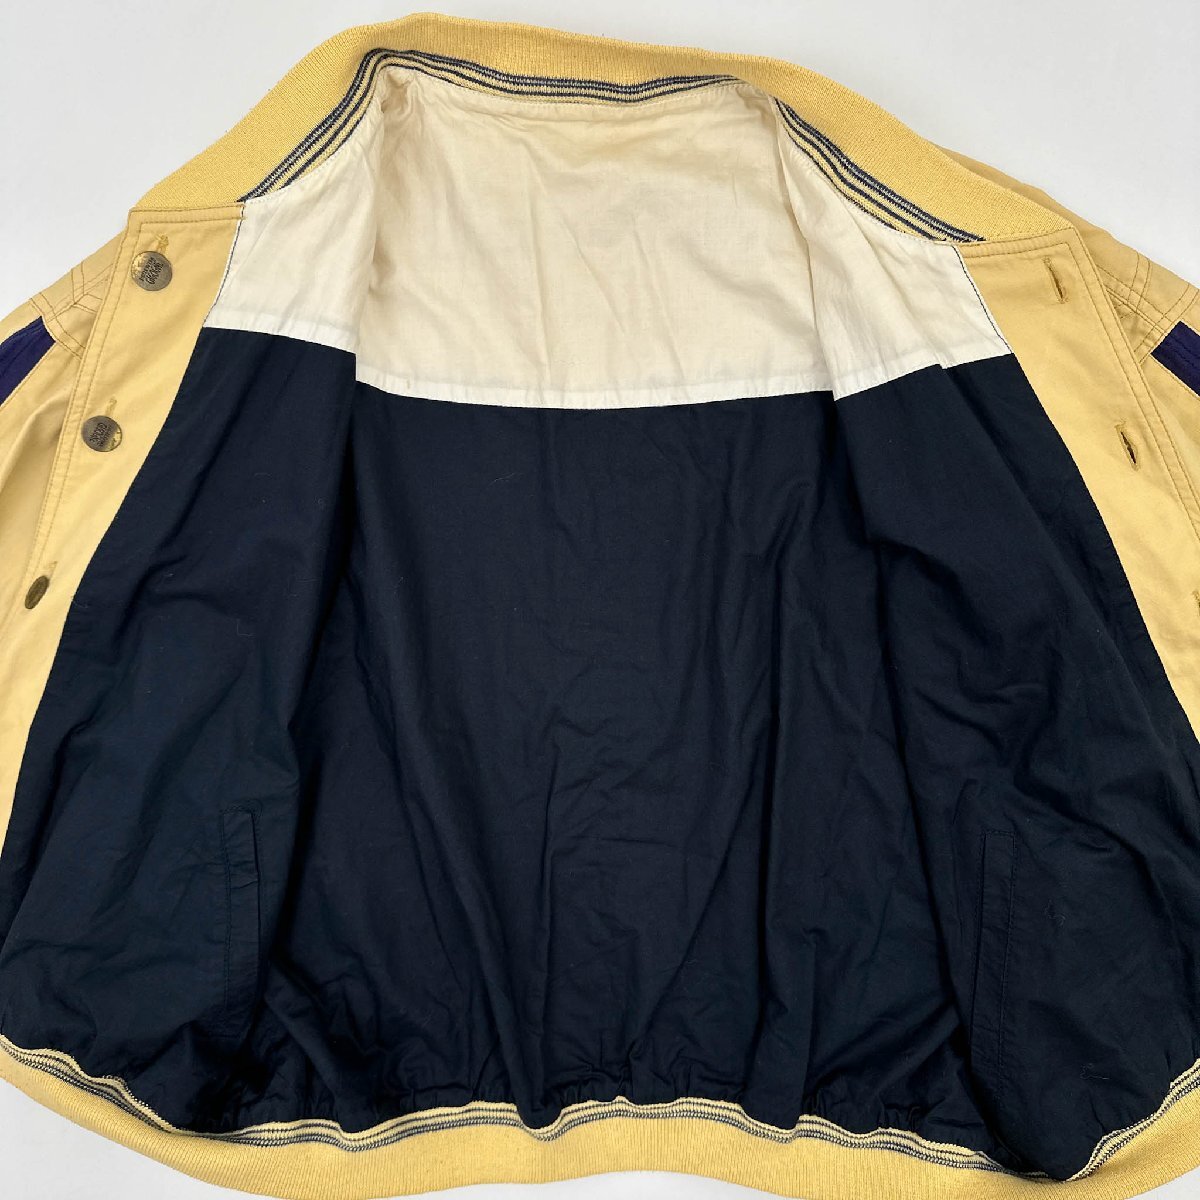  rare!! rare!! Vintage!!*Marithe + Francois Girbaud Mali te franc sowa Jill bo-MFG 80\'s CLOSED reversible archive jacket 48/90s